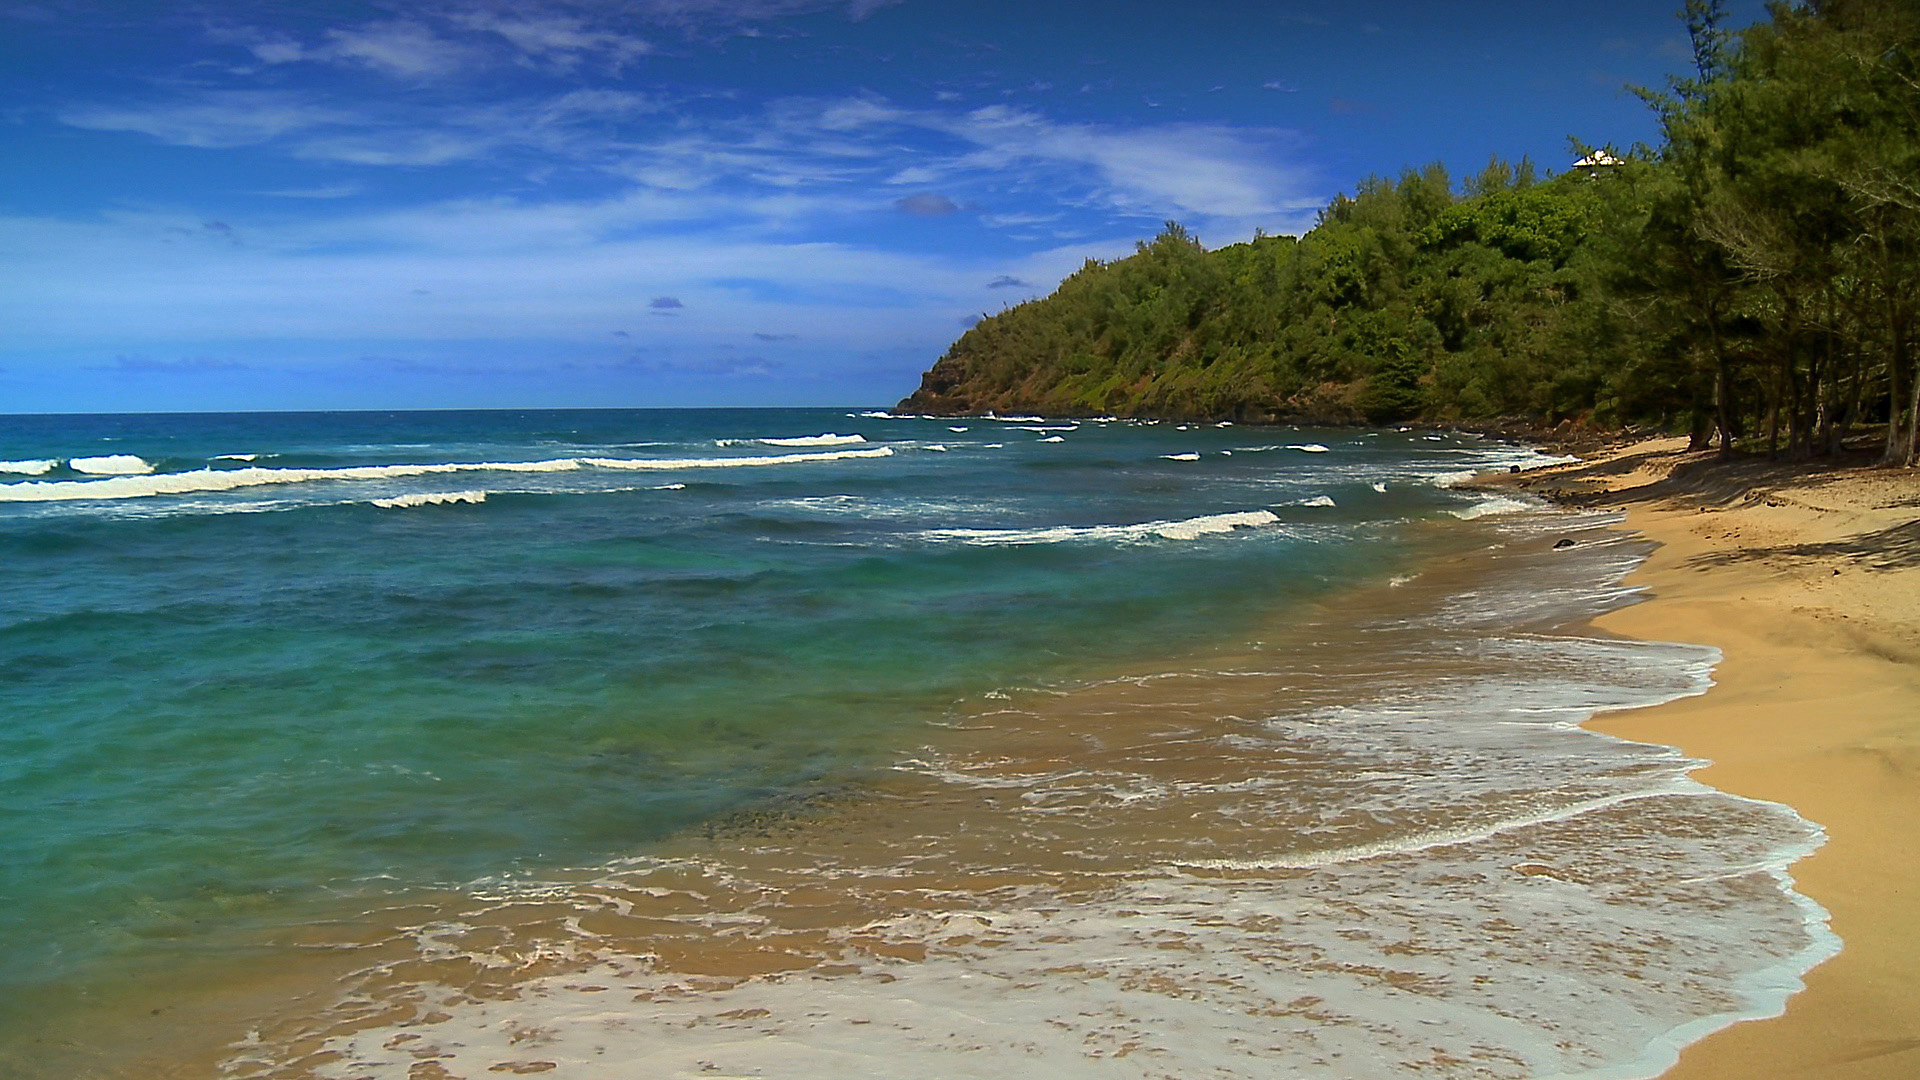 Hawaii Beaches Screensaver Pc Android iPhone And iPad Wallpaper